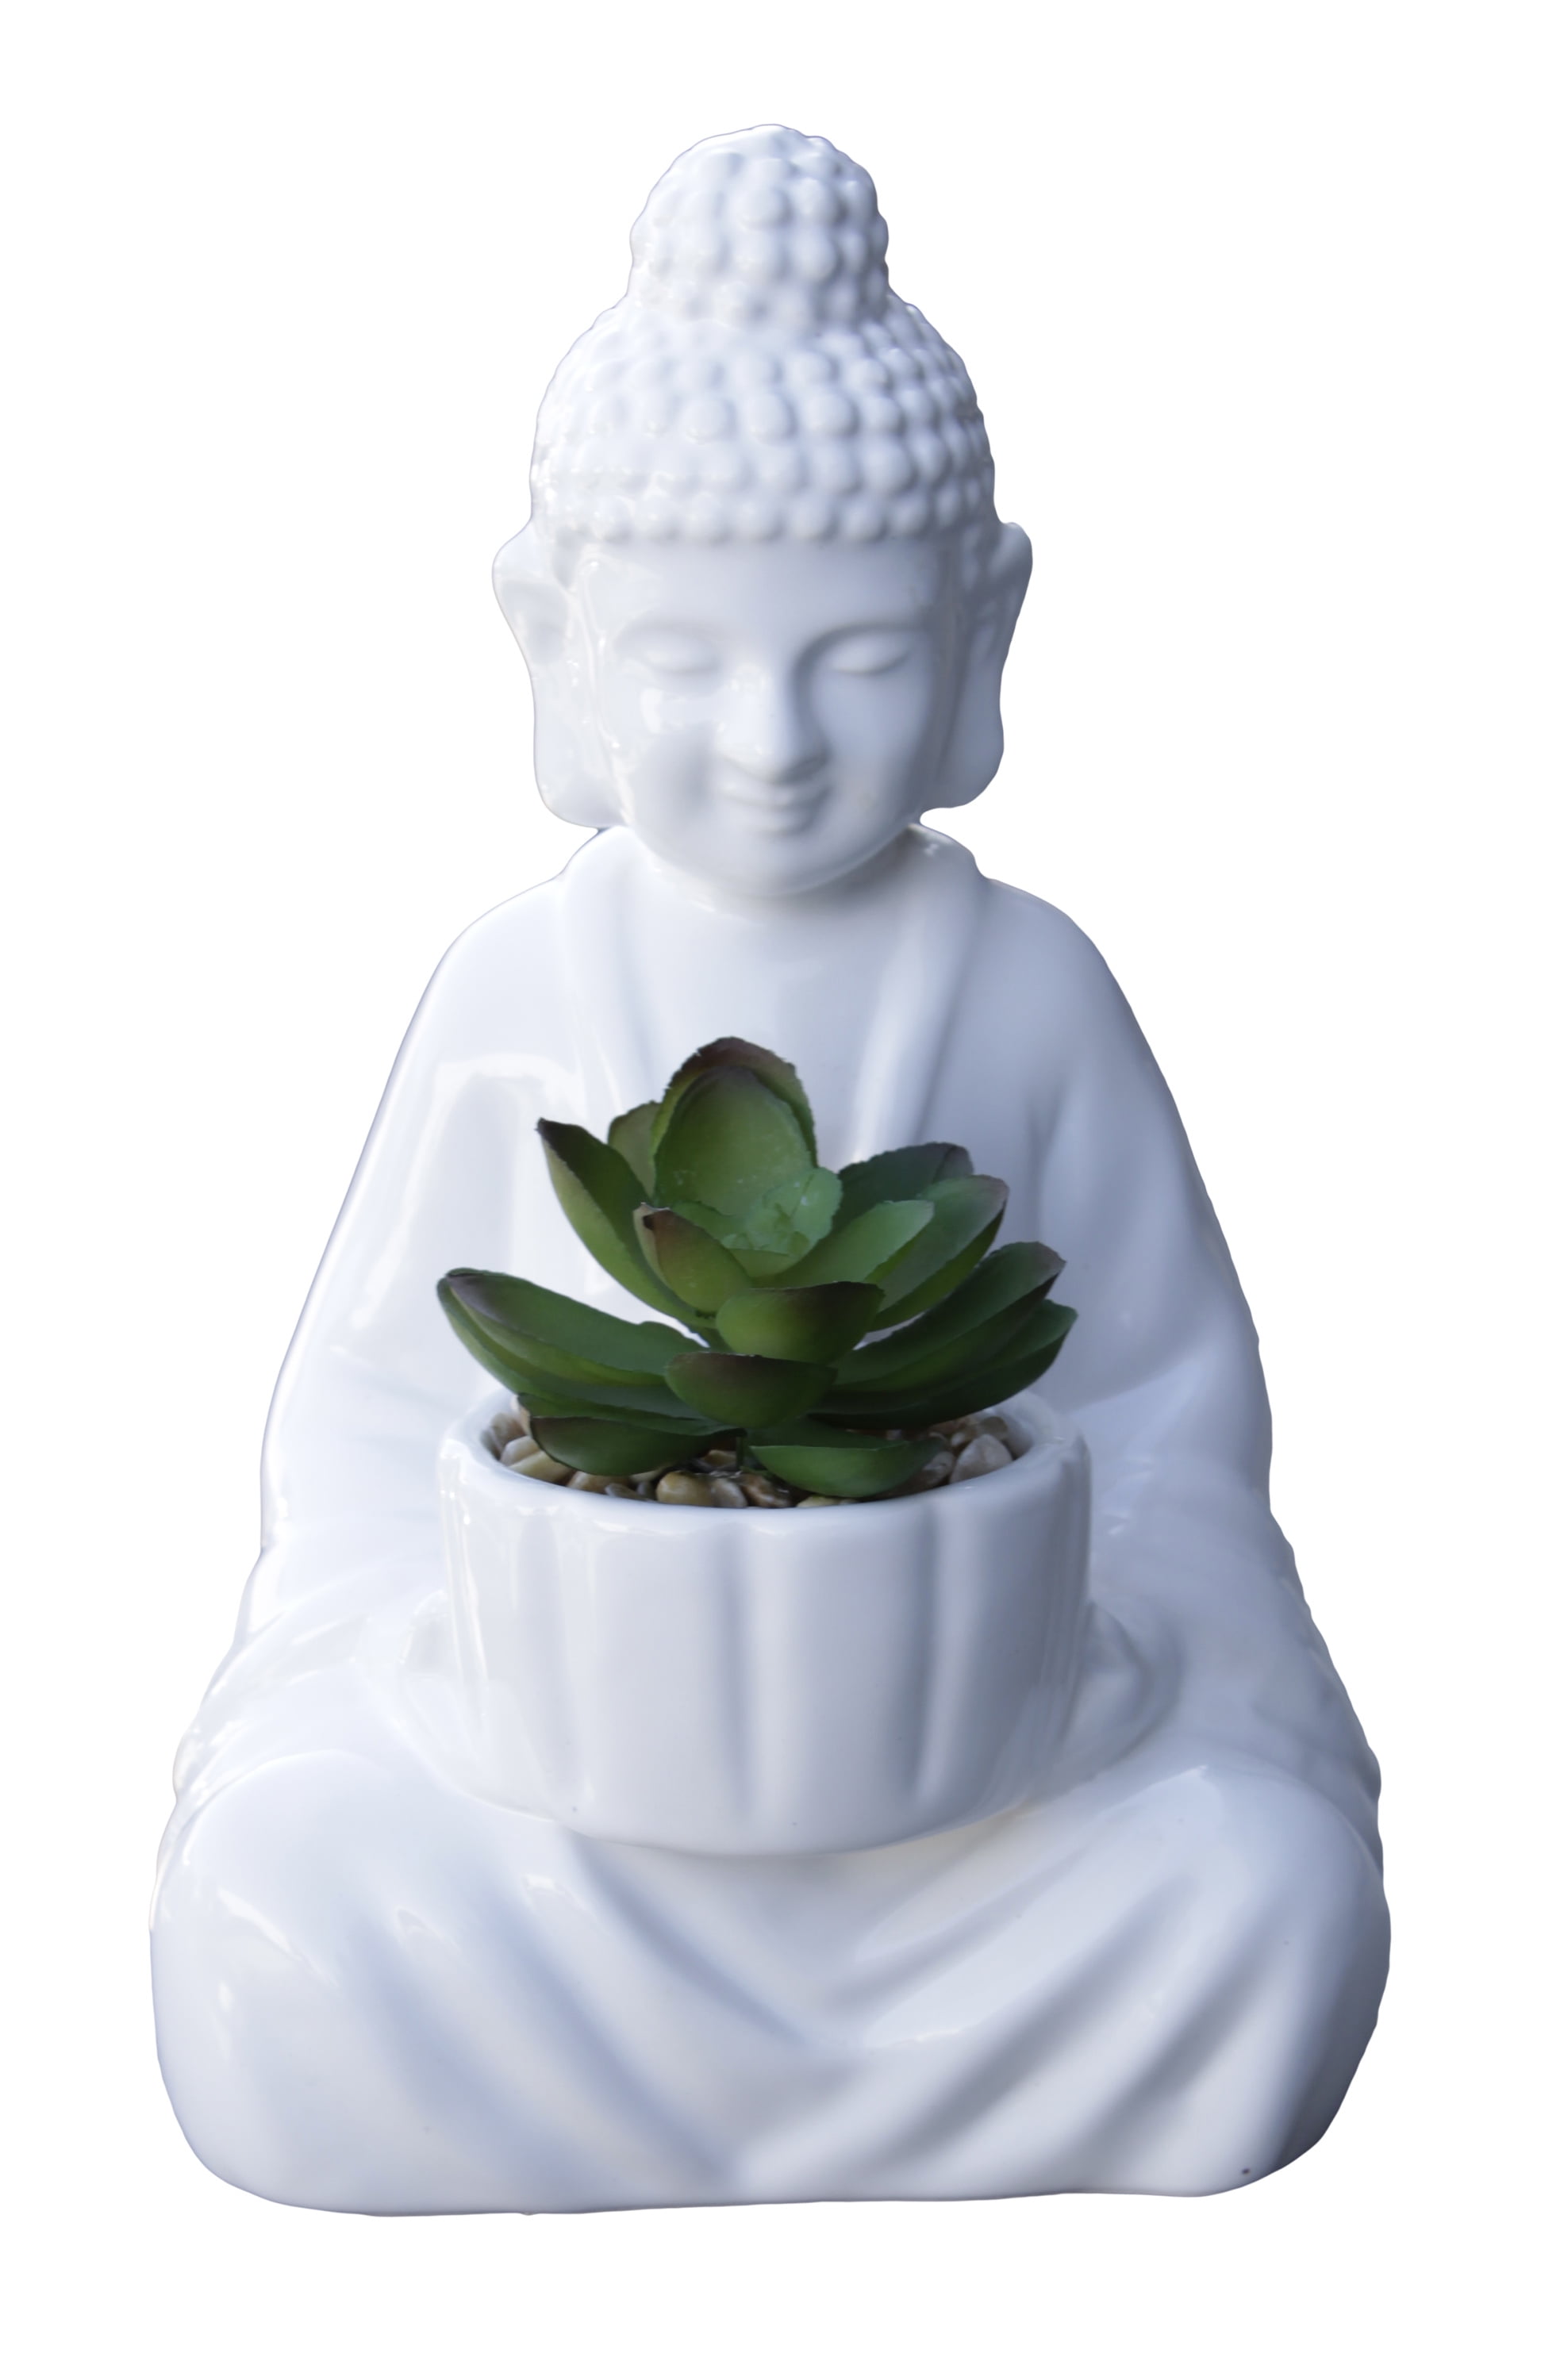 Mainstays 8.5" Artificial Succulent Arrangement in White Buddha Ceramic Planter (8.5"H x 5"W x 5"D)